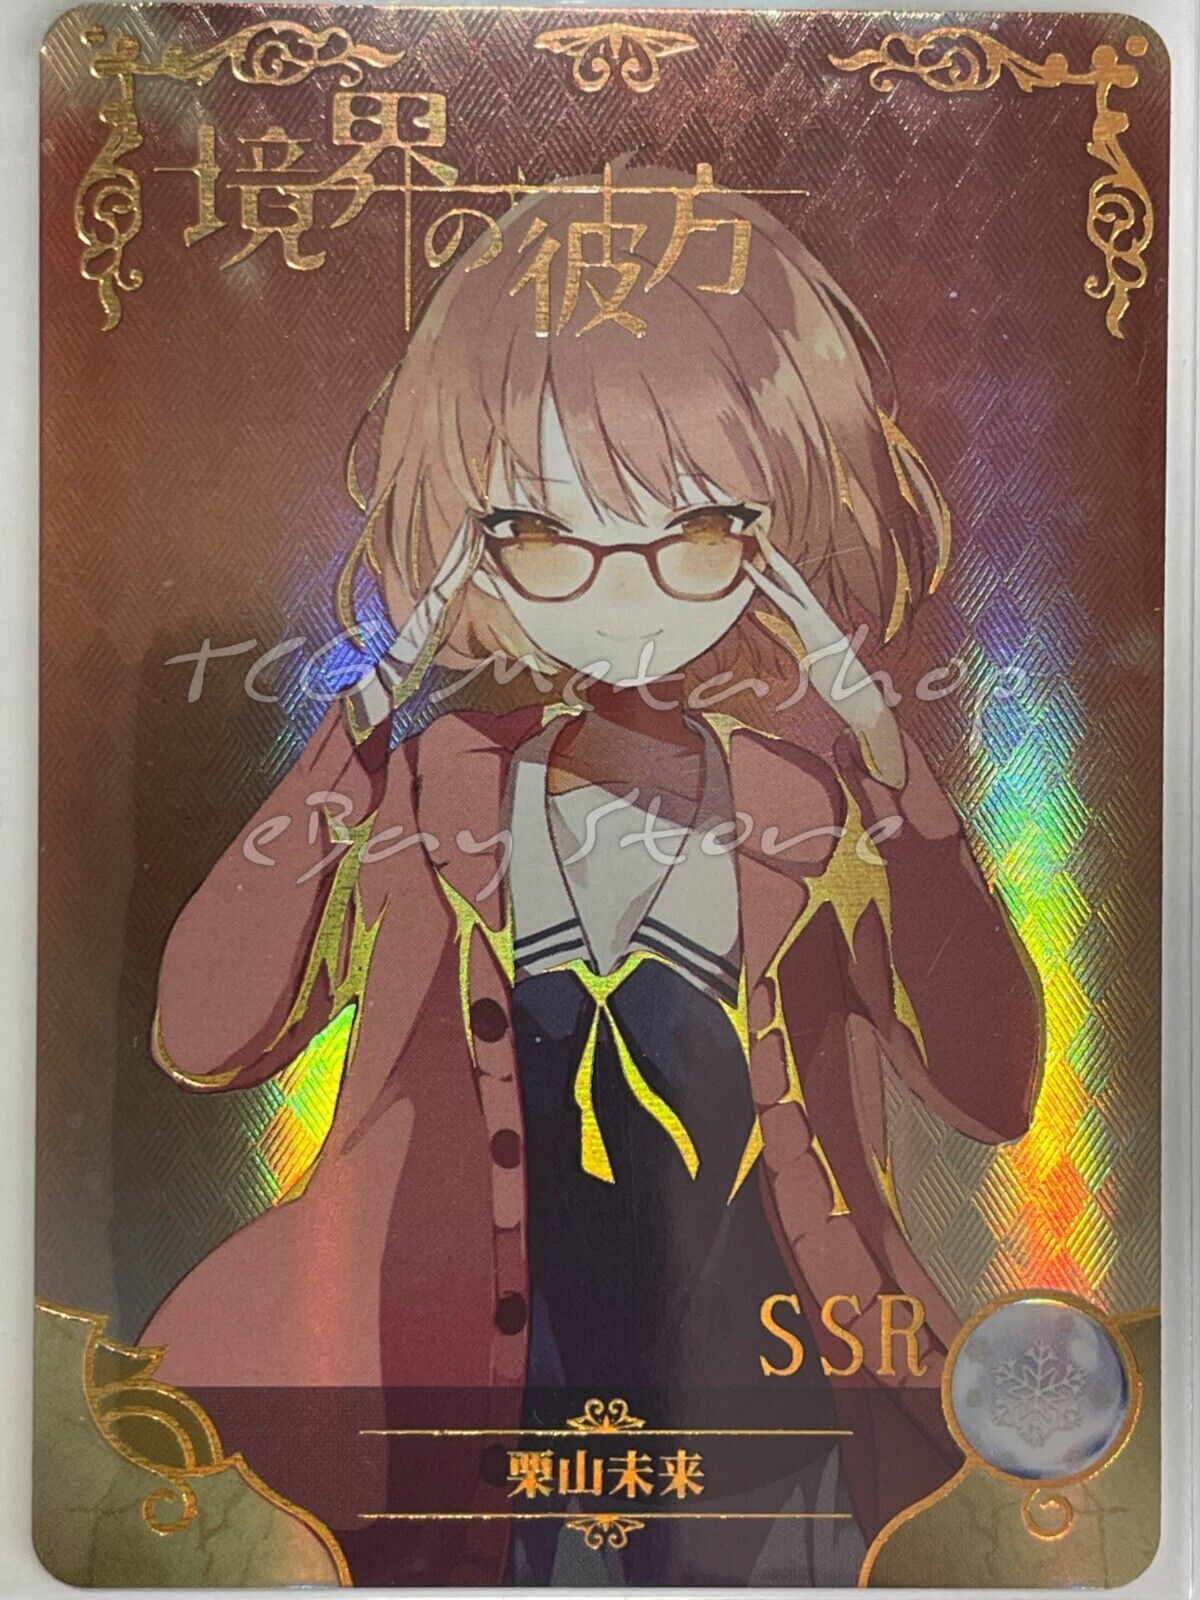 🔥 NS 02 [Pick Your Singles SSR SR] Goddess Story Waifu Anime Cards 🔥